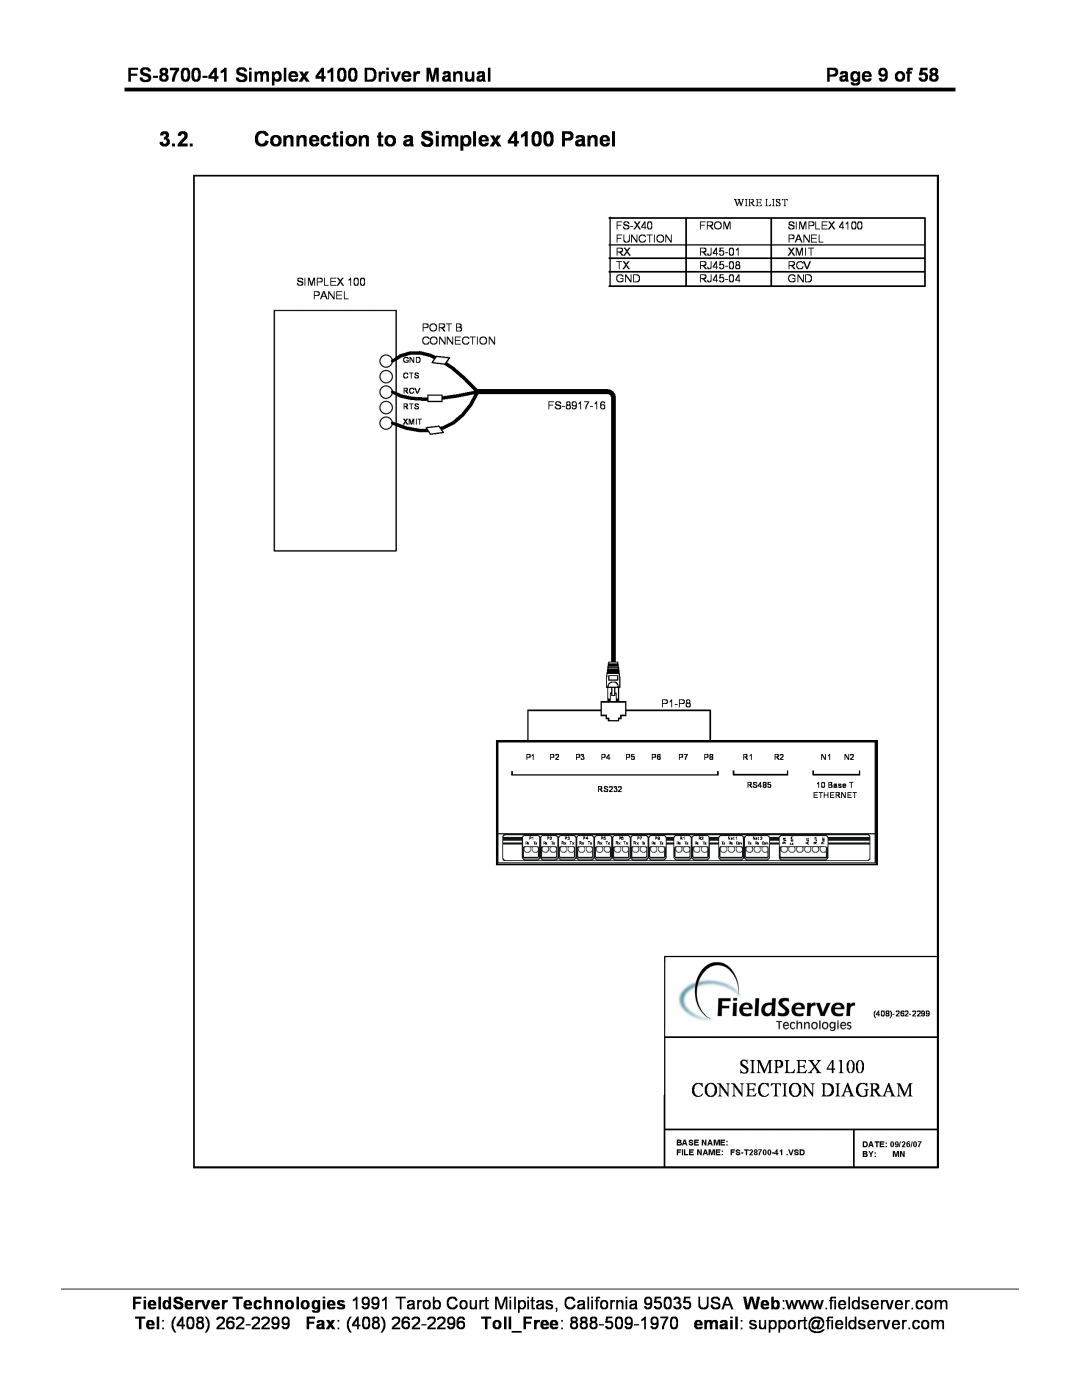 FieldServer FS-8700-41 Connection to a Simplex 4100 Panel, Simplex Connection Diagram, Tel4082622299, Fax4082622296 